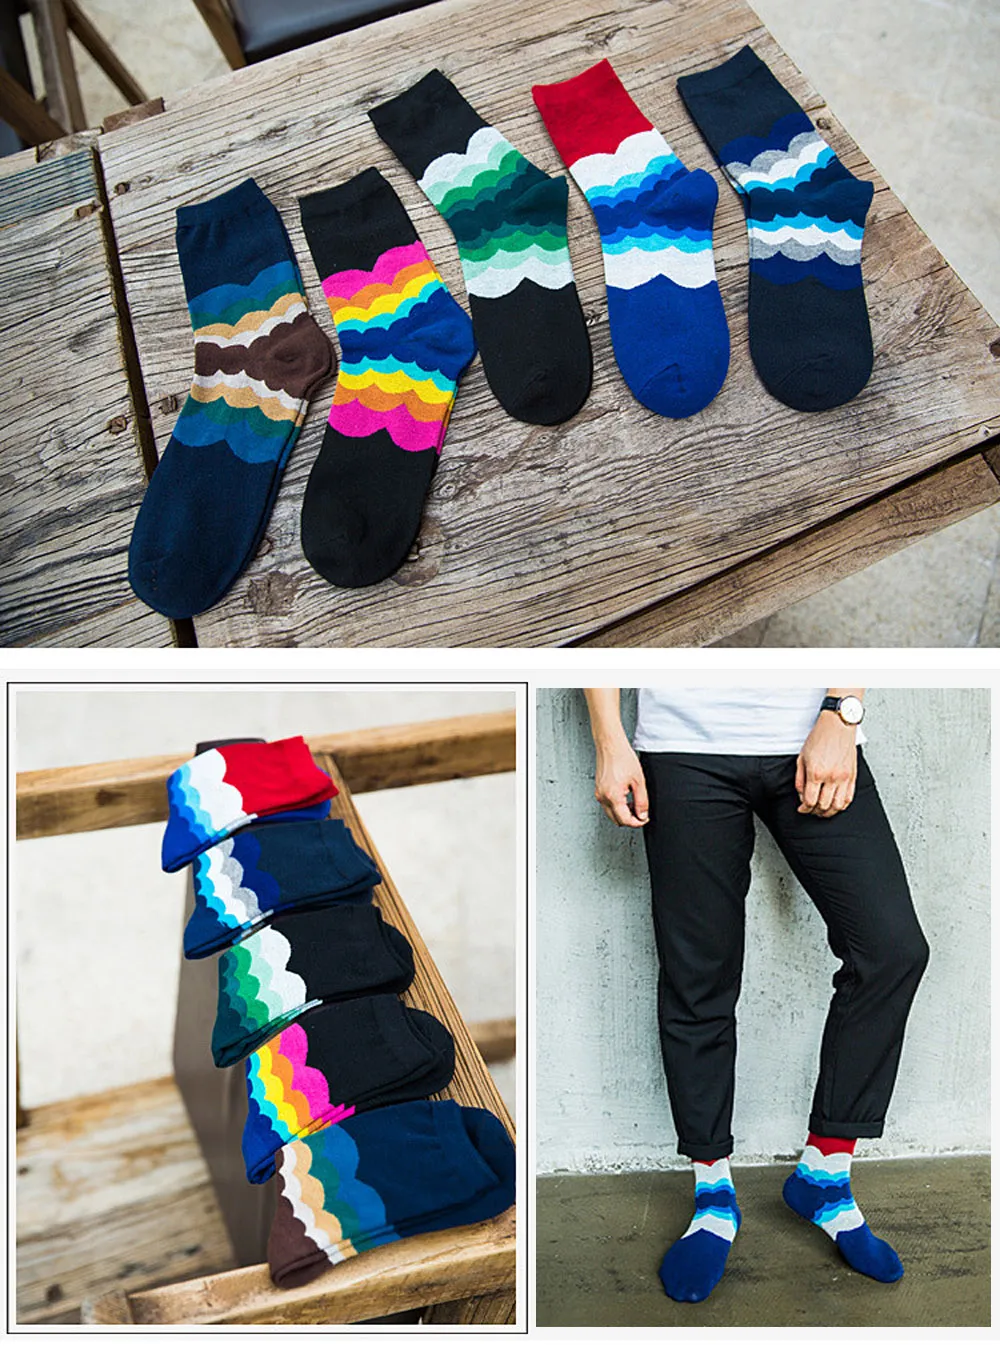 1-men`s socks